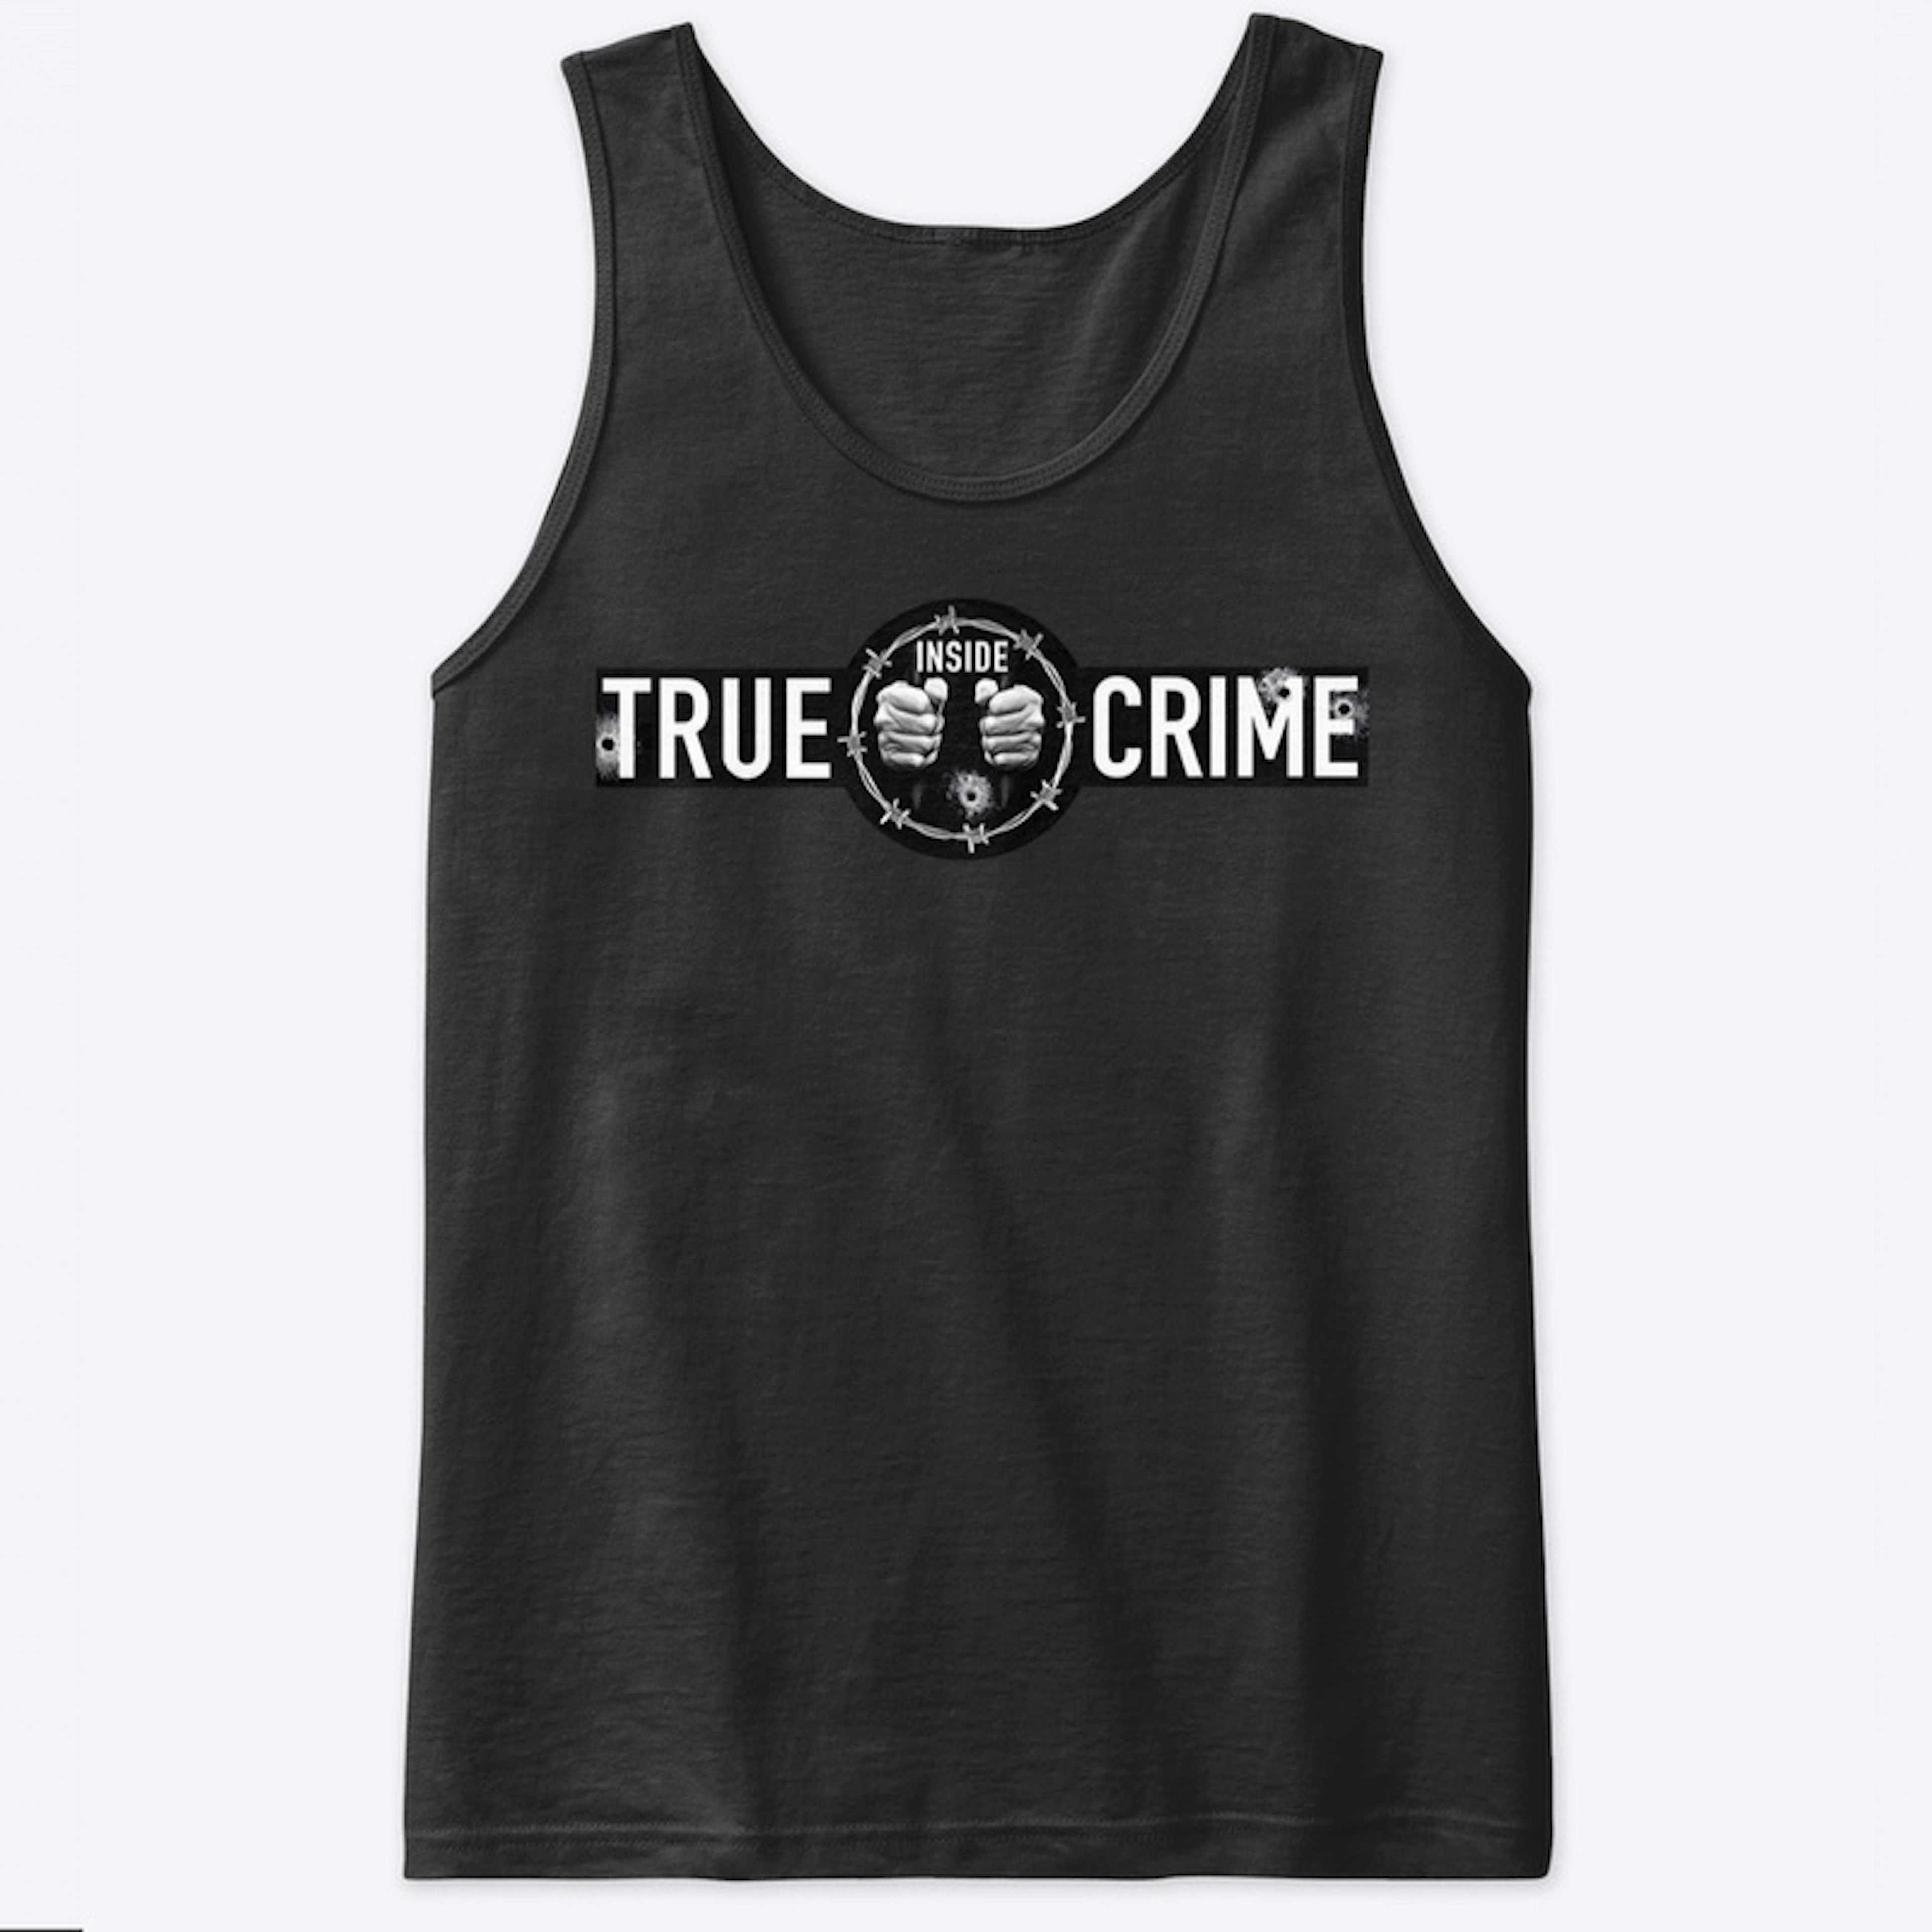 Inside true crime logo tank